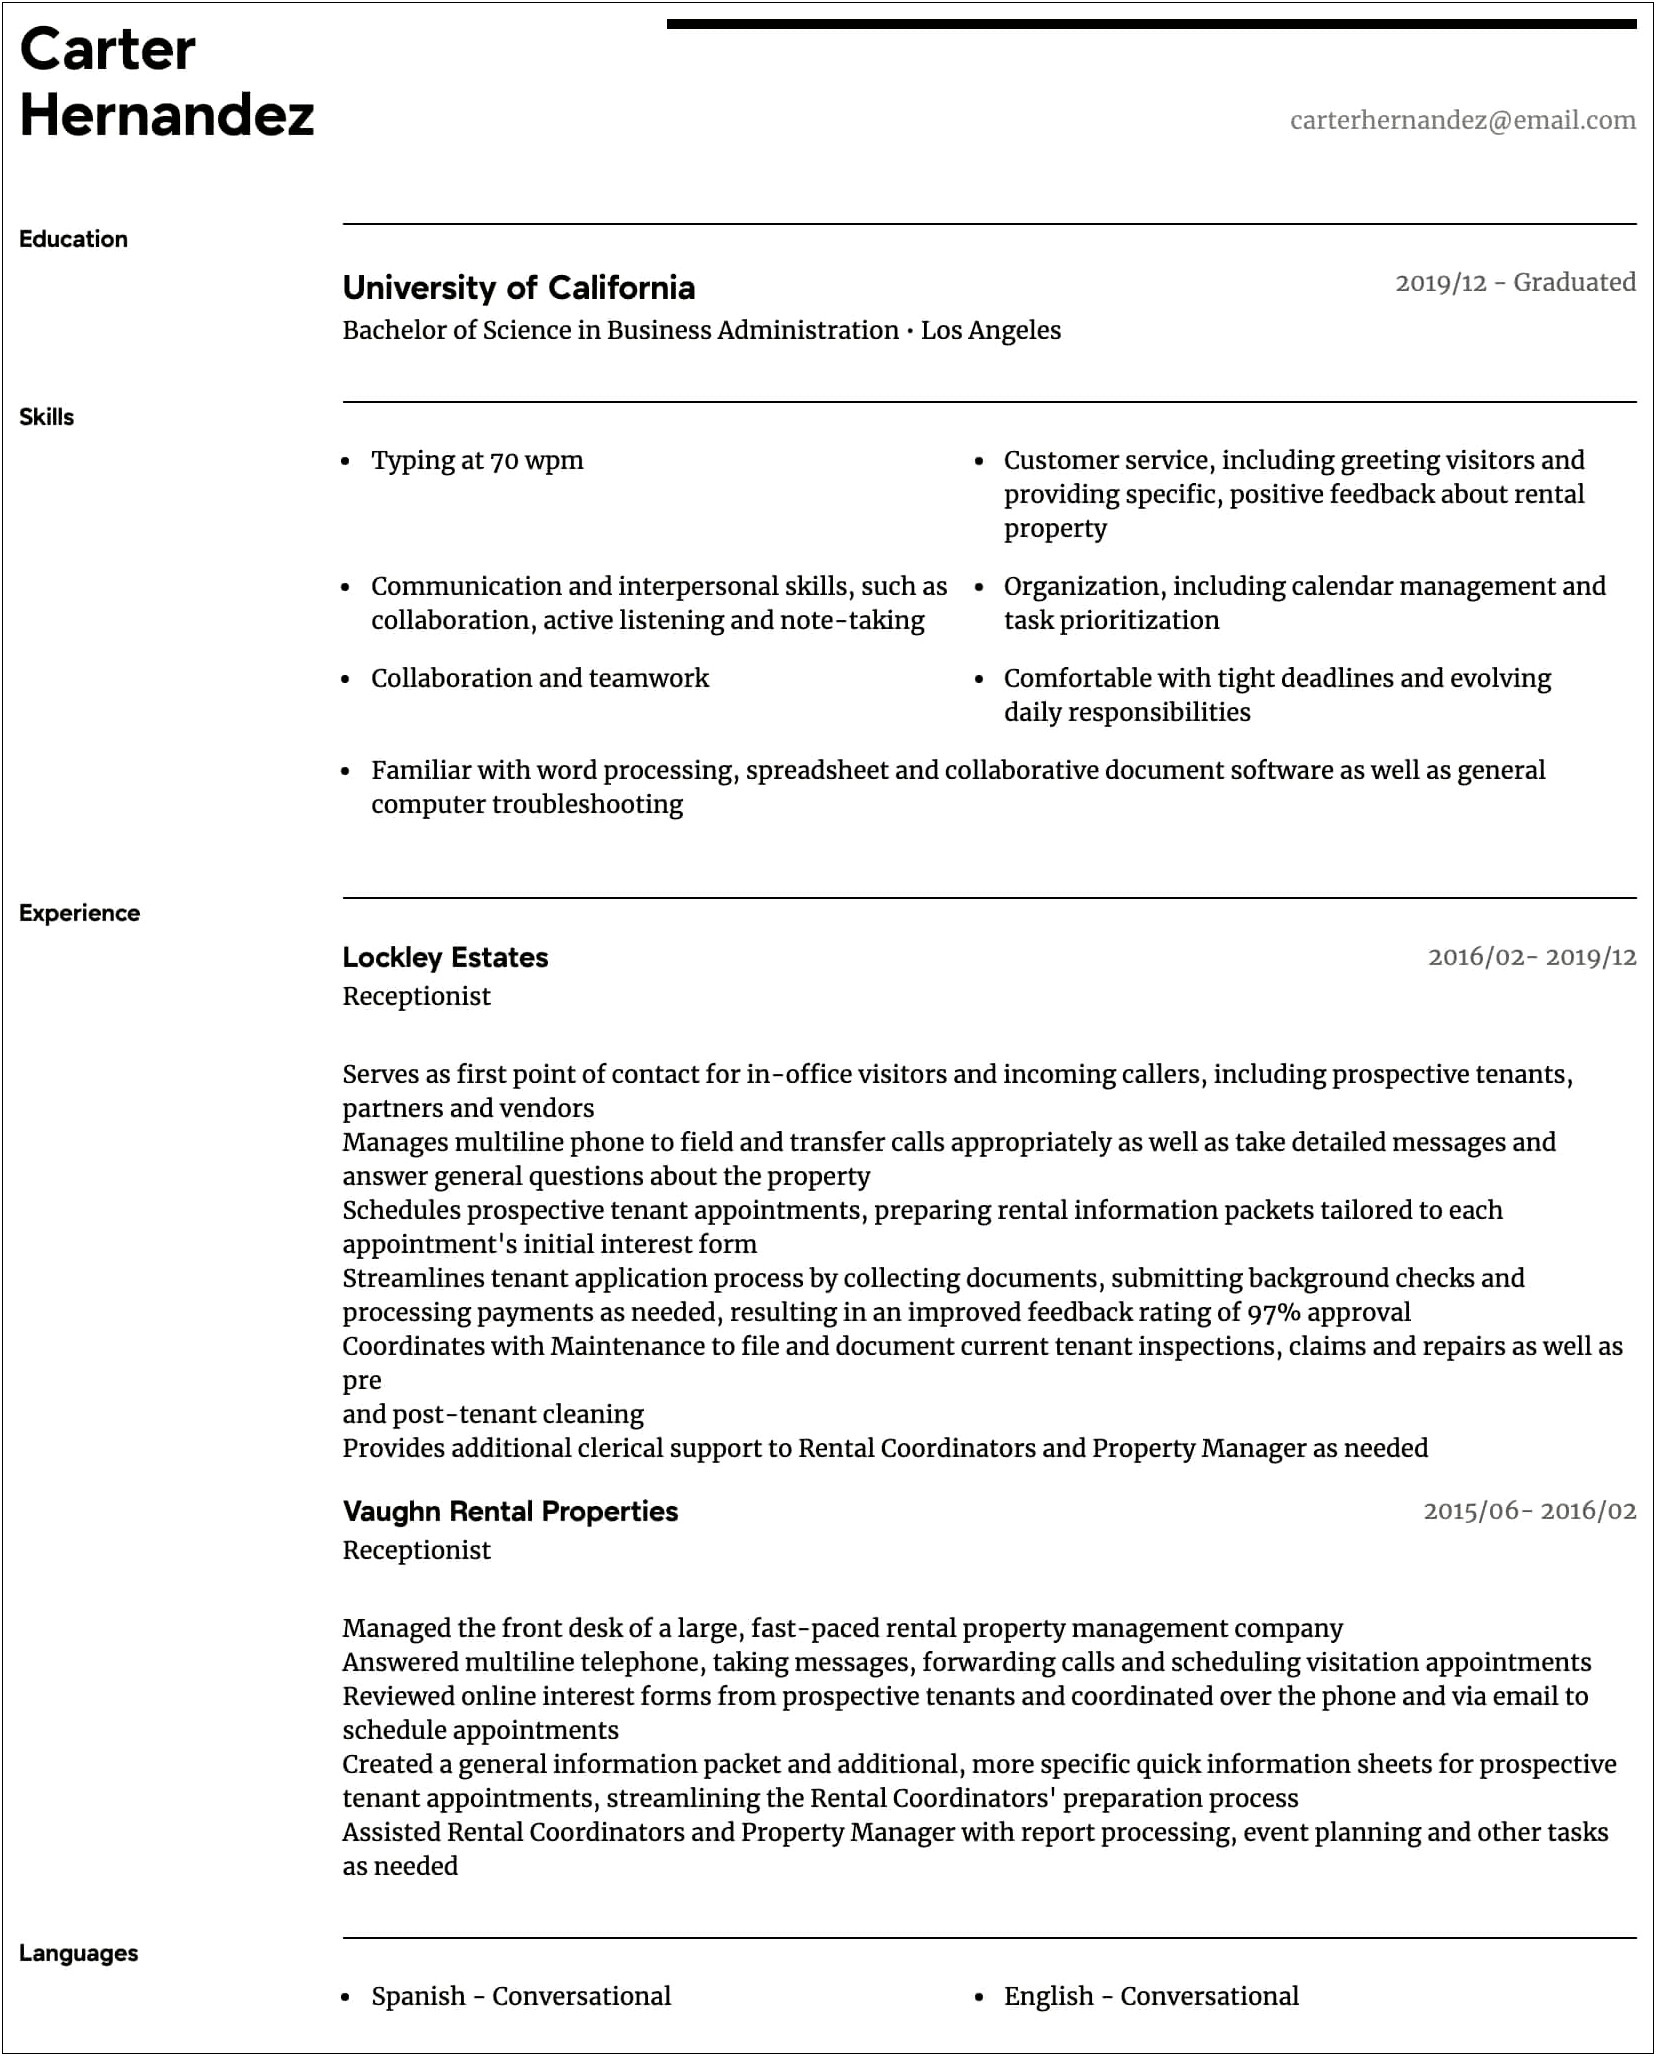 Clerical Jobs Description For Resume